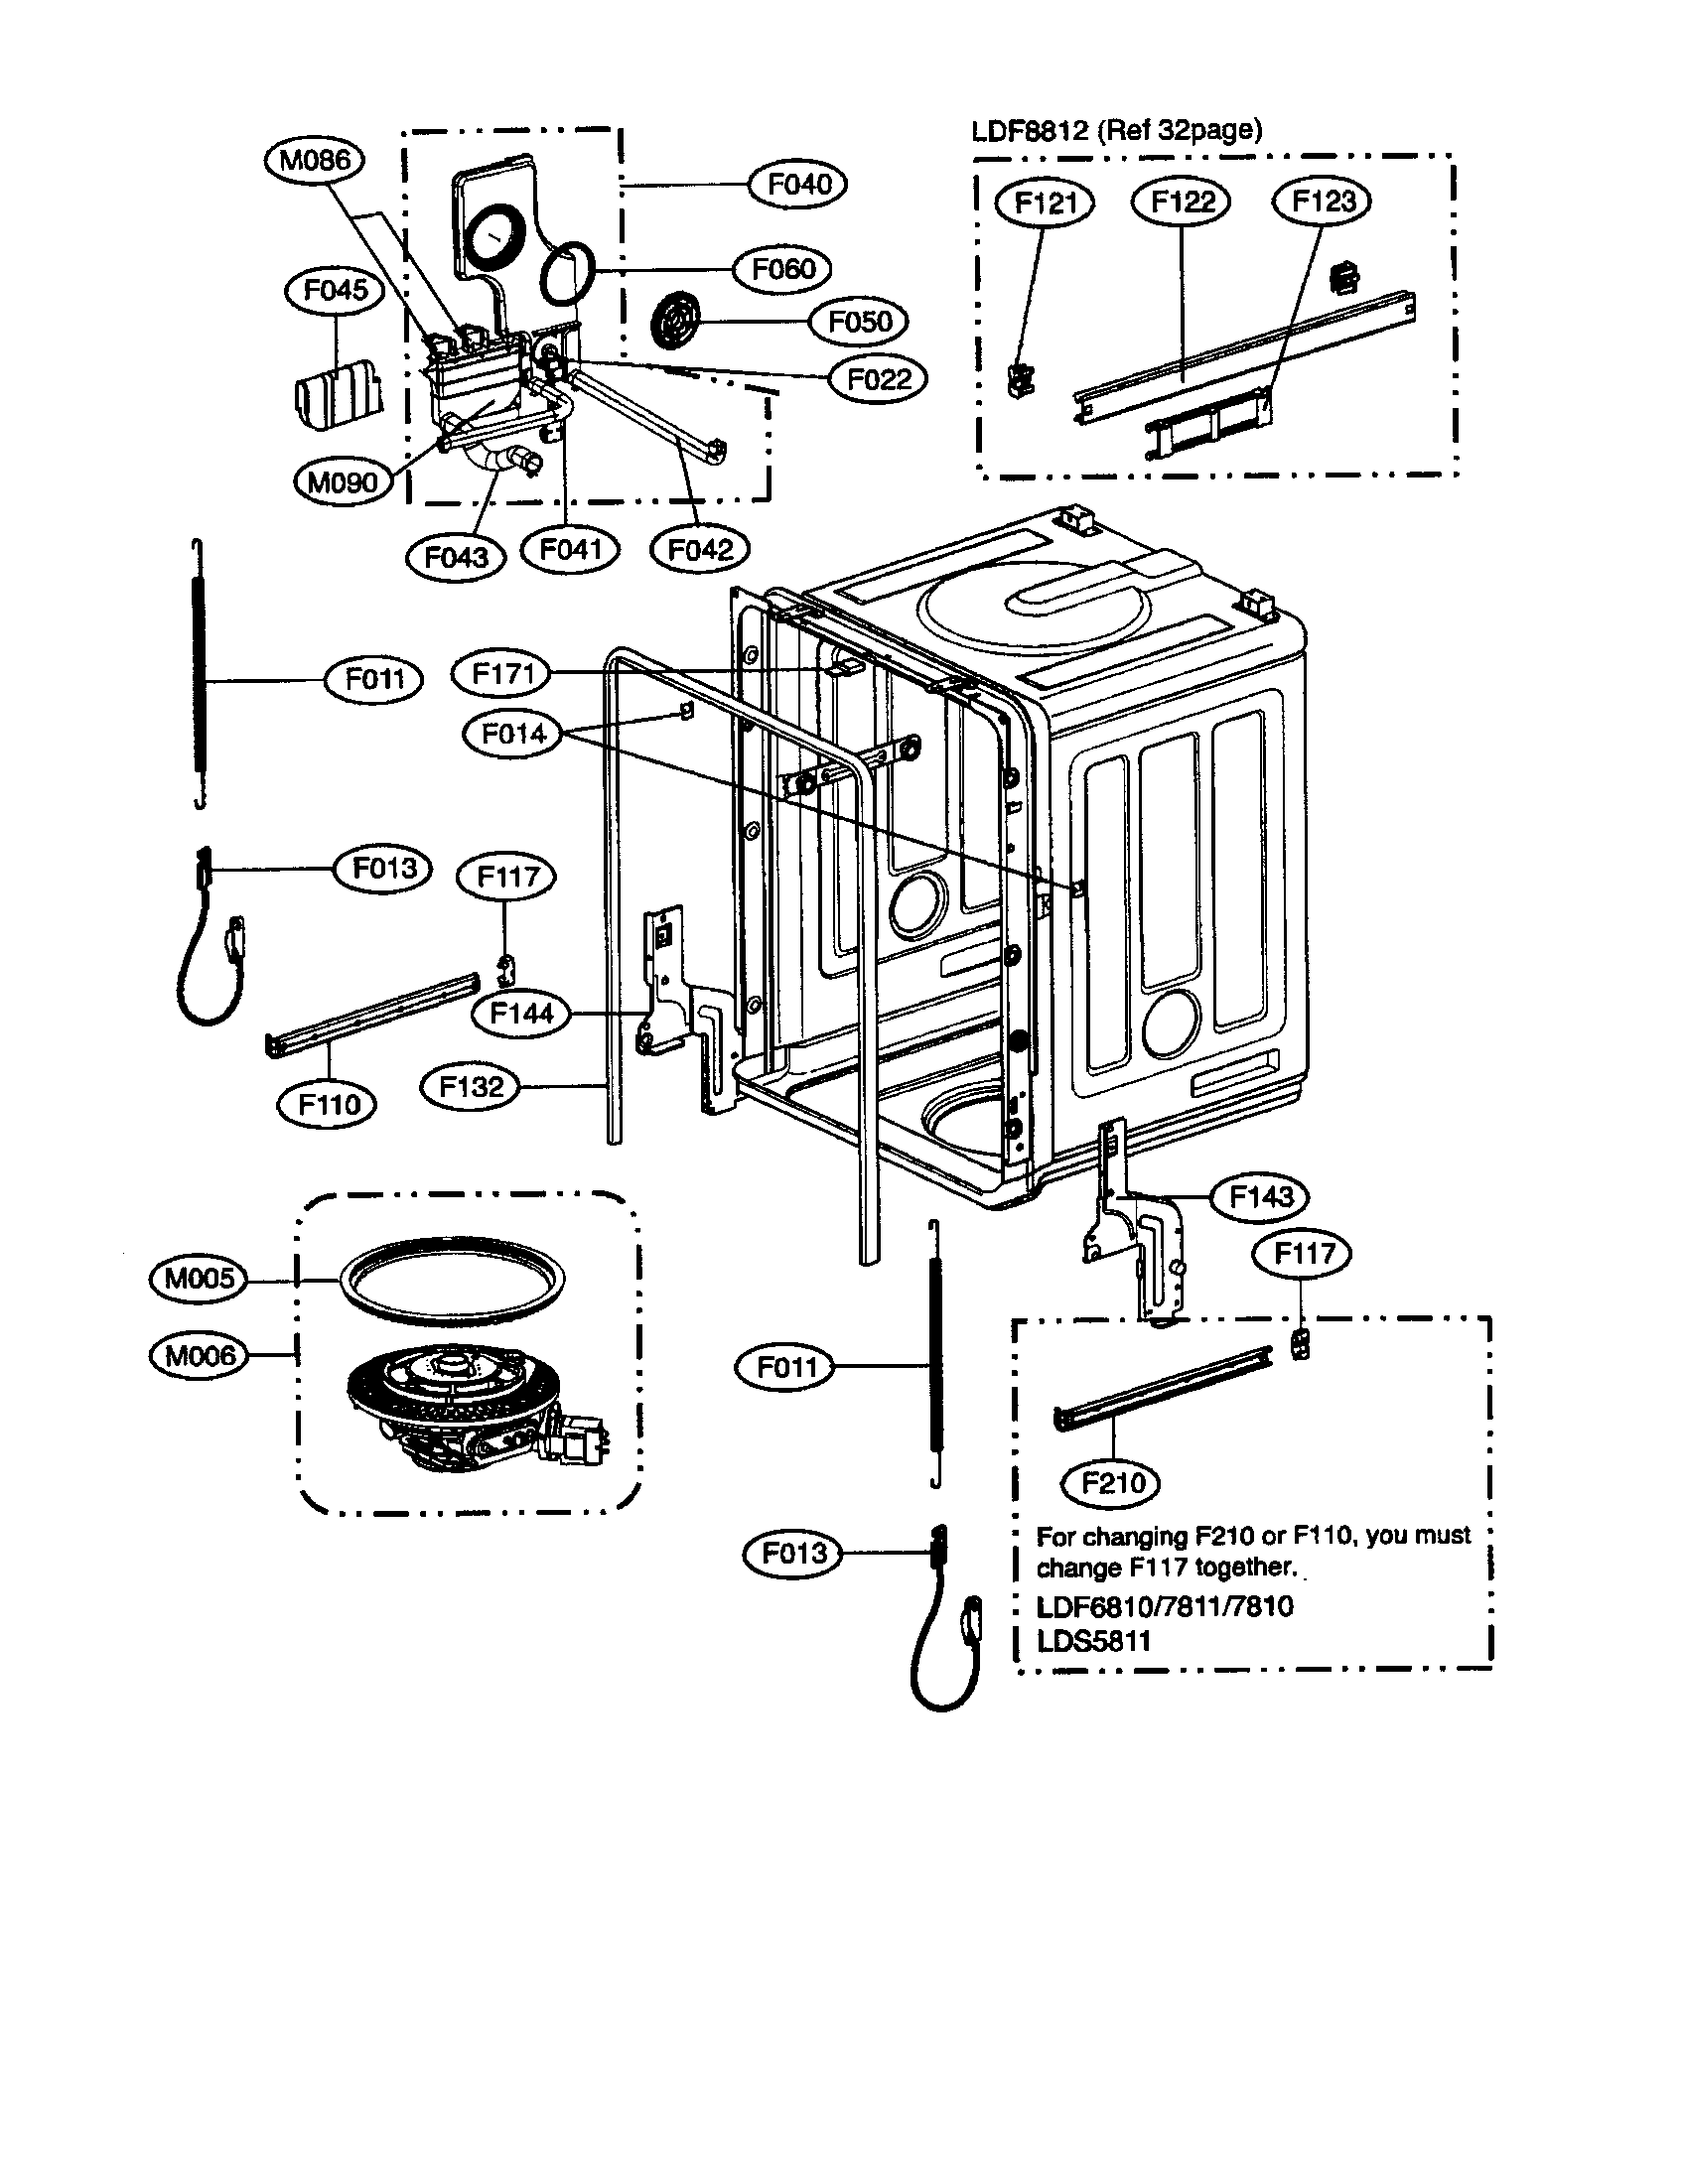 Tub Diagram  U0026 Parts List For Model Ldf8812st Lg